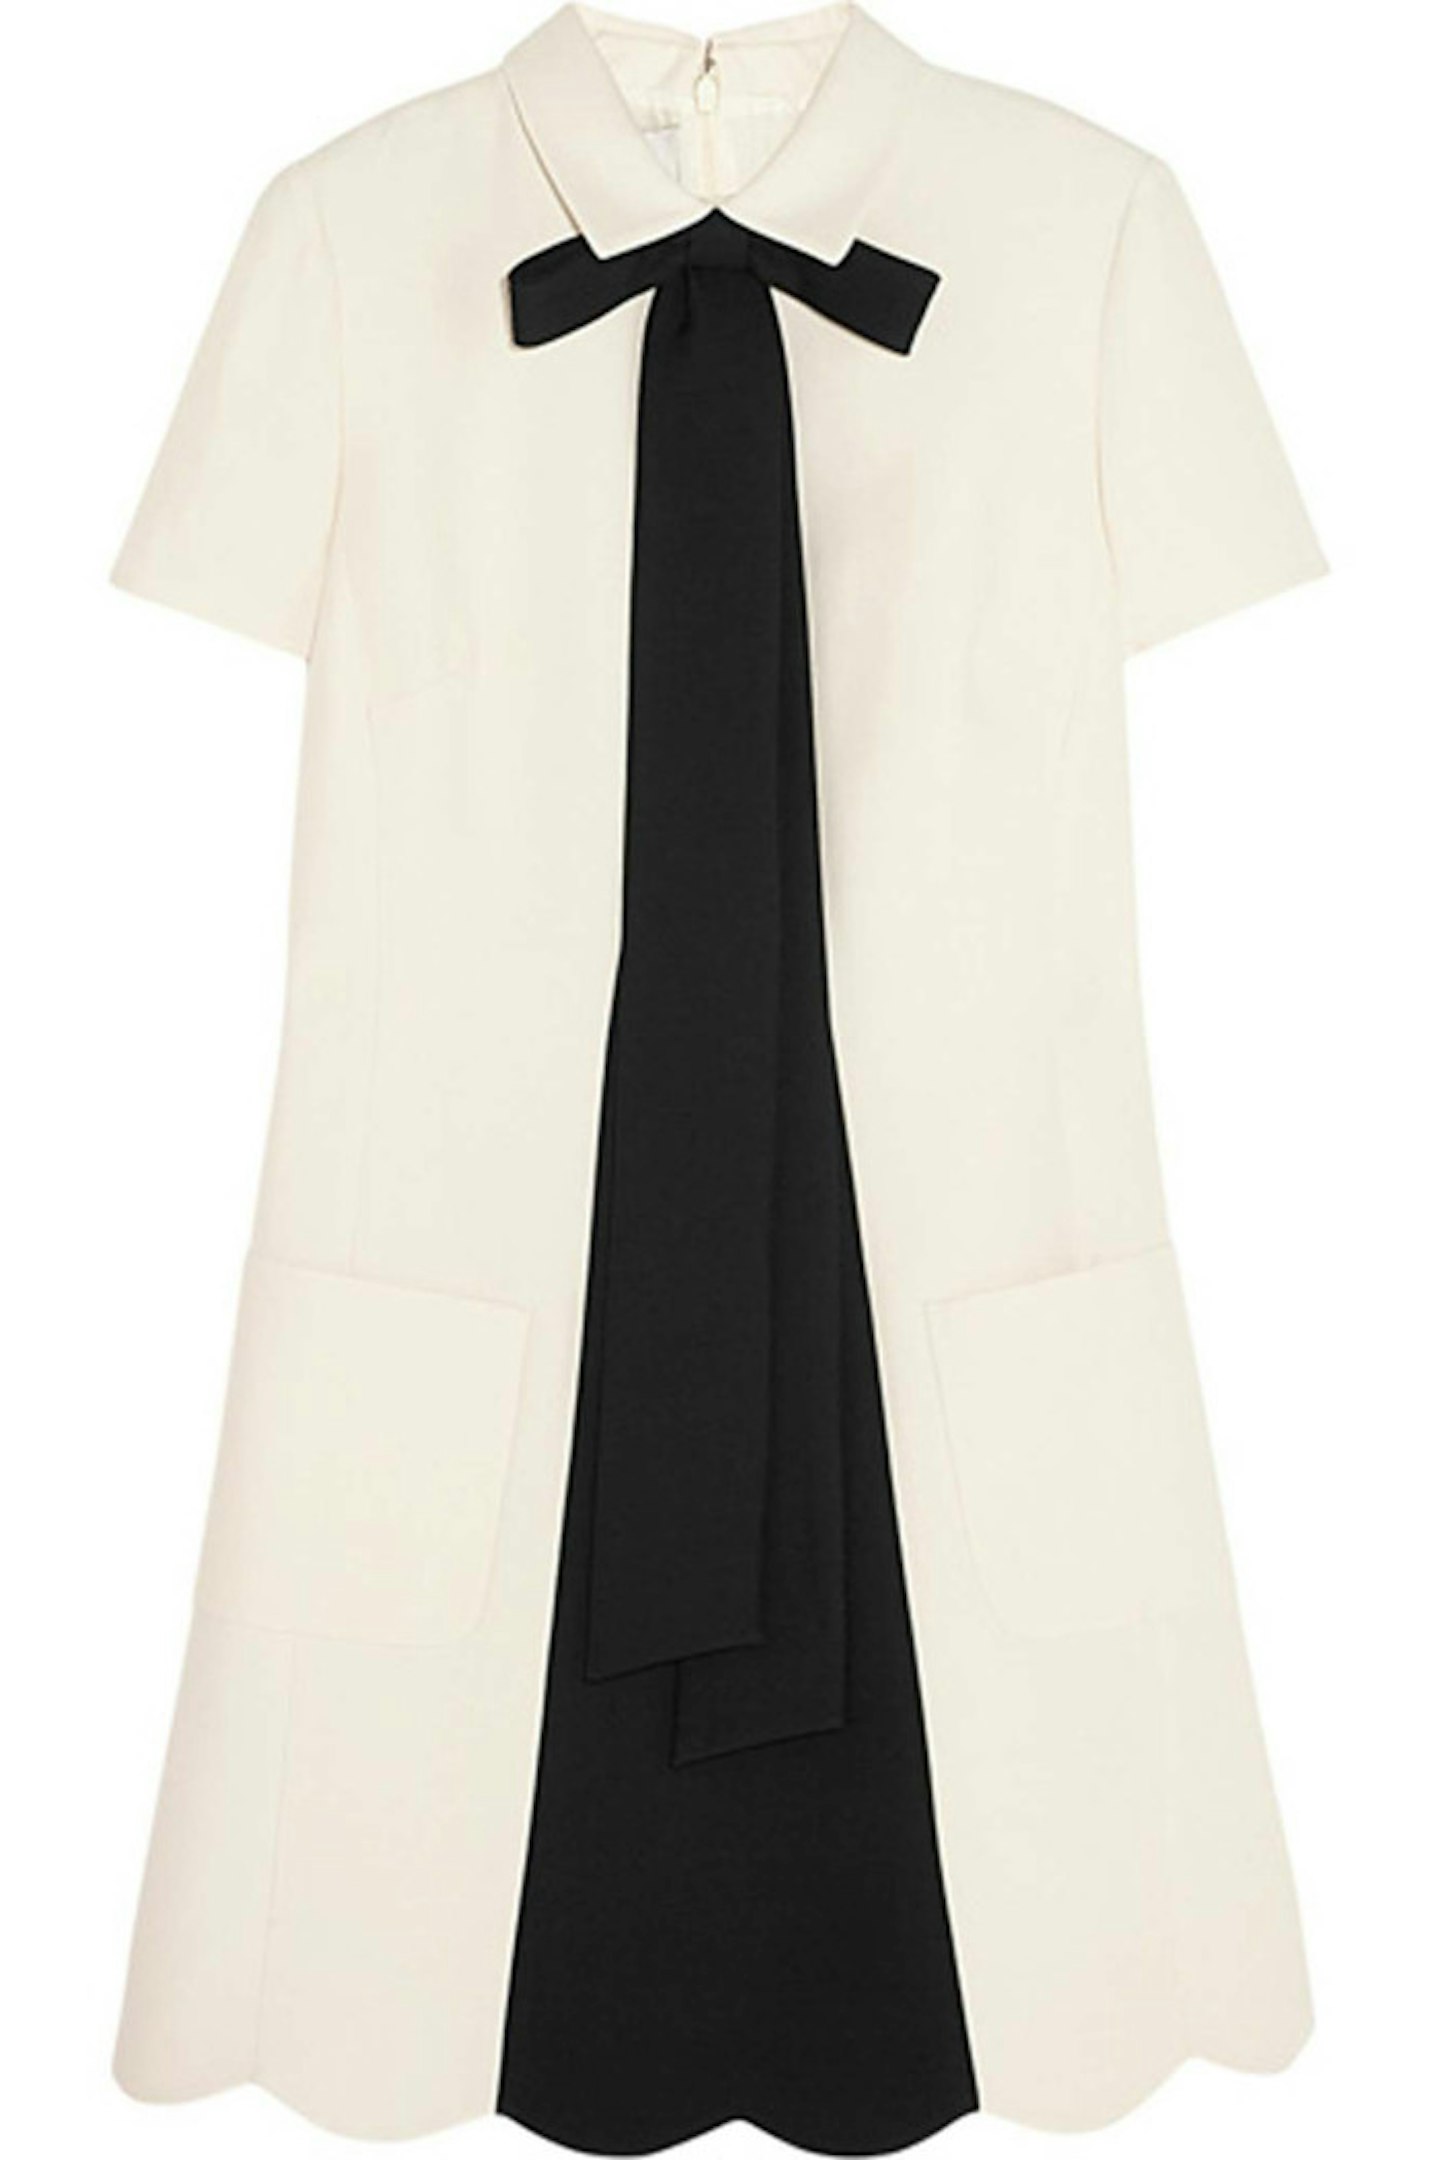 14. Bow-embellished Mini Dress, £1725, Valentino at Net-A-Porter